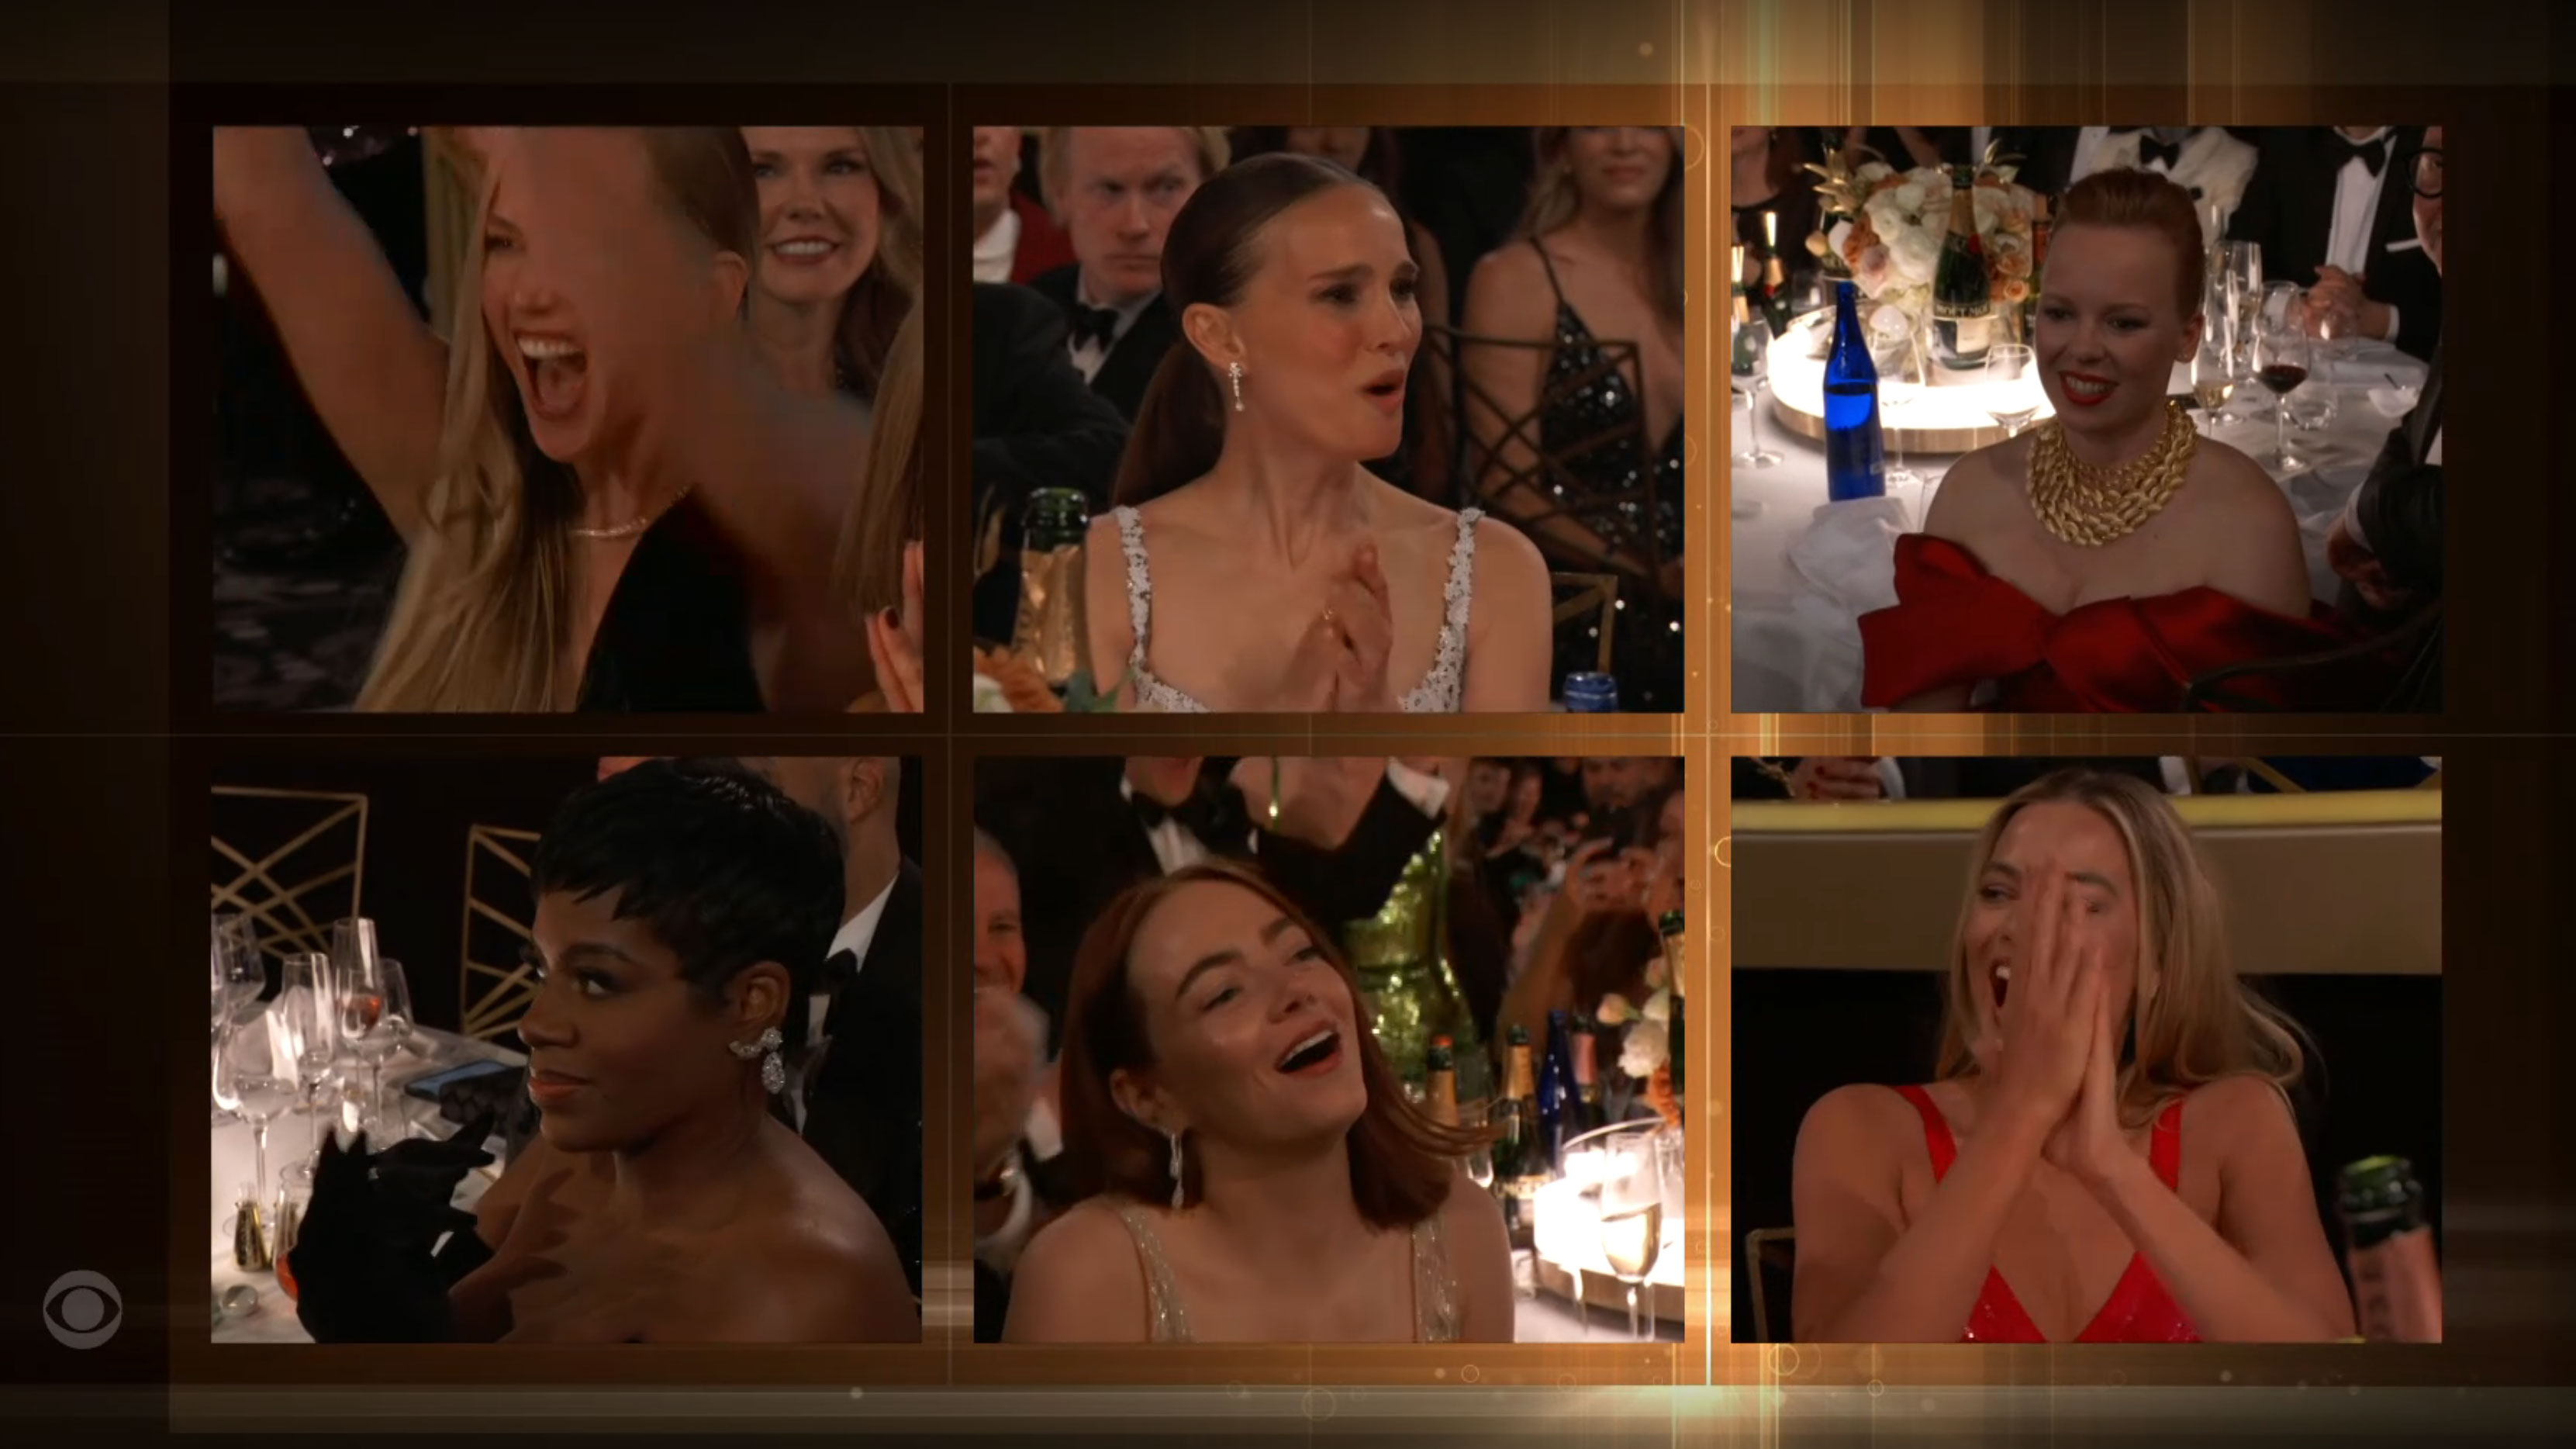 Jennifer (top left) ended up cheering for joy when Emma won